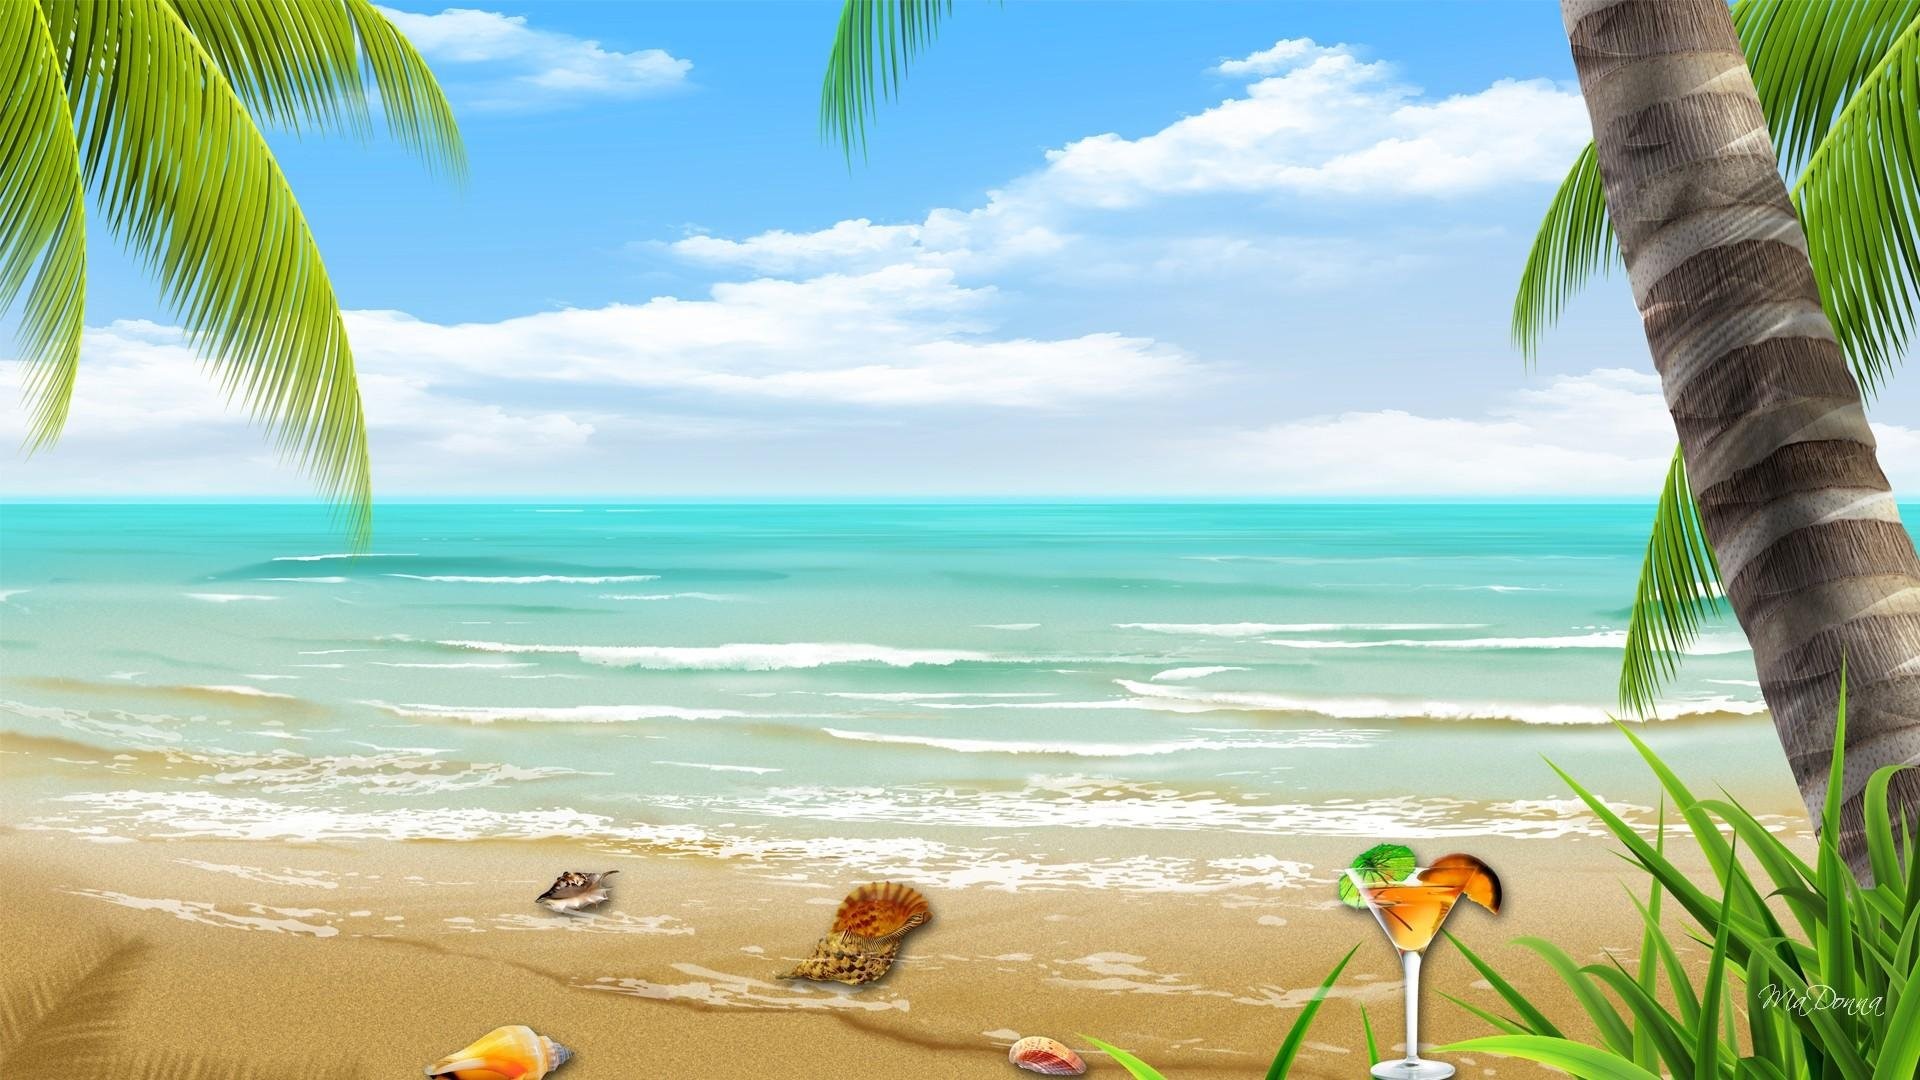 1920x1080 Latest Tropical Beach Backgrounds For Desktop Wallpaper pics. Best Tropical  Beach Sunset Backgrounds of the world.